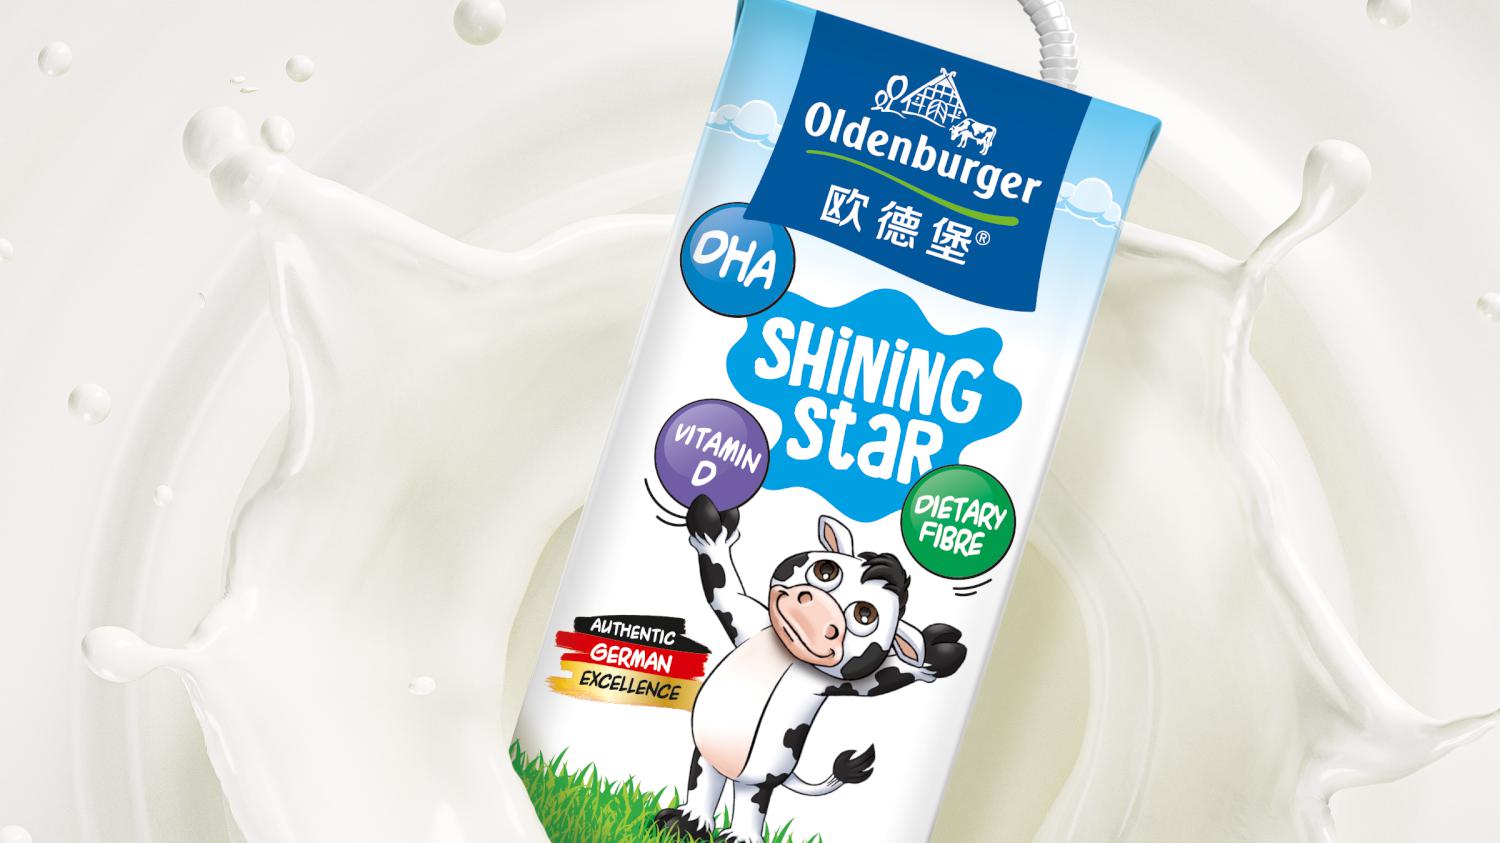 Oldenburg DMK Shining Star Kids Milk Launch Graphic Design Line Extension Naming Packaging Design Logo Design Line Extension